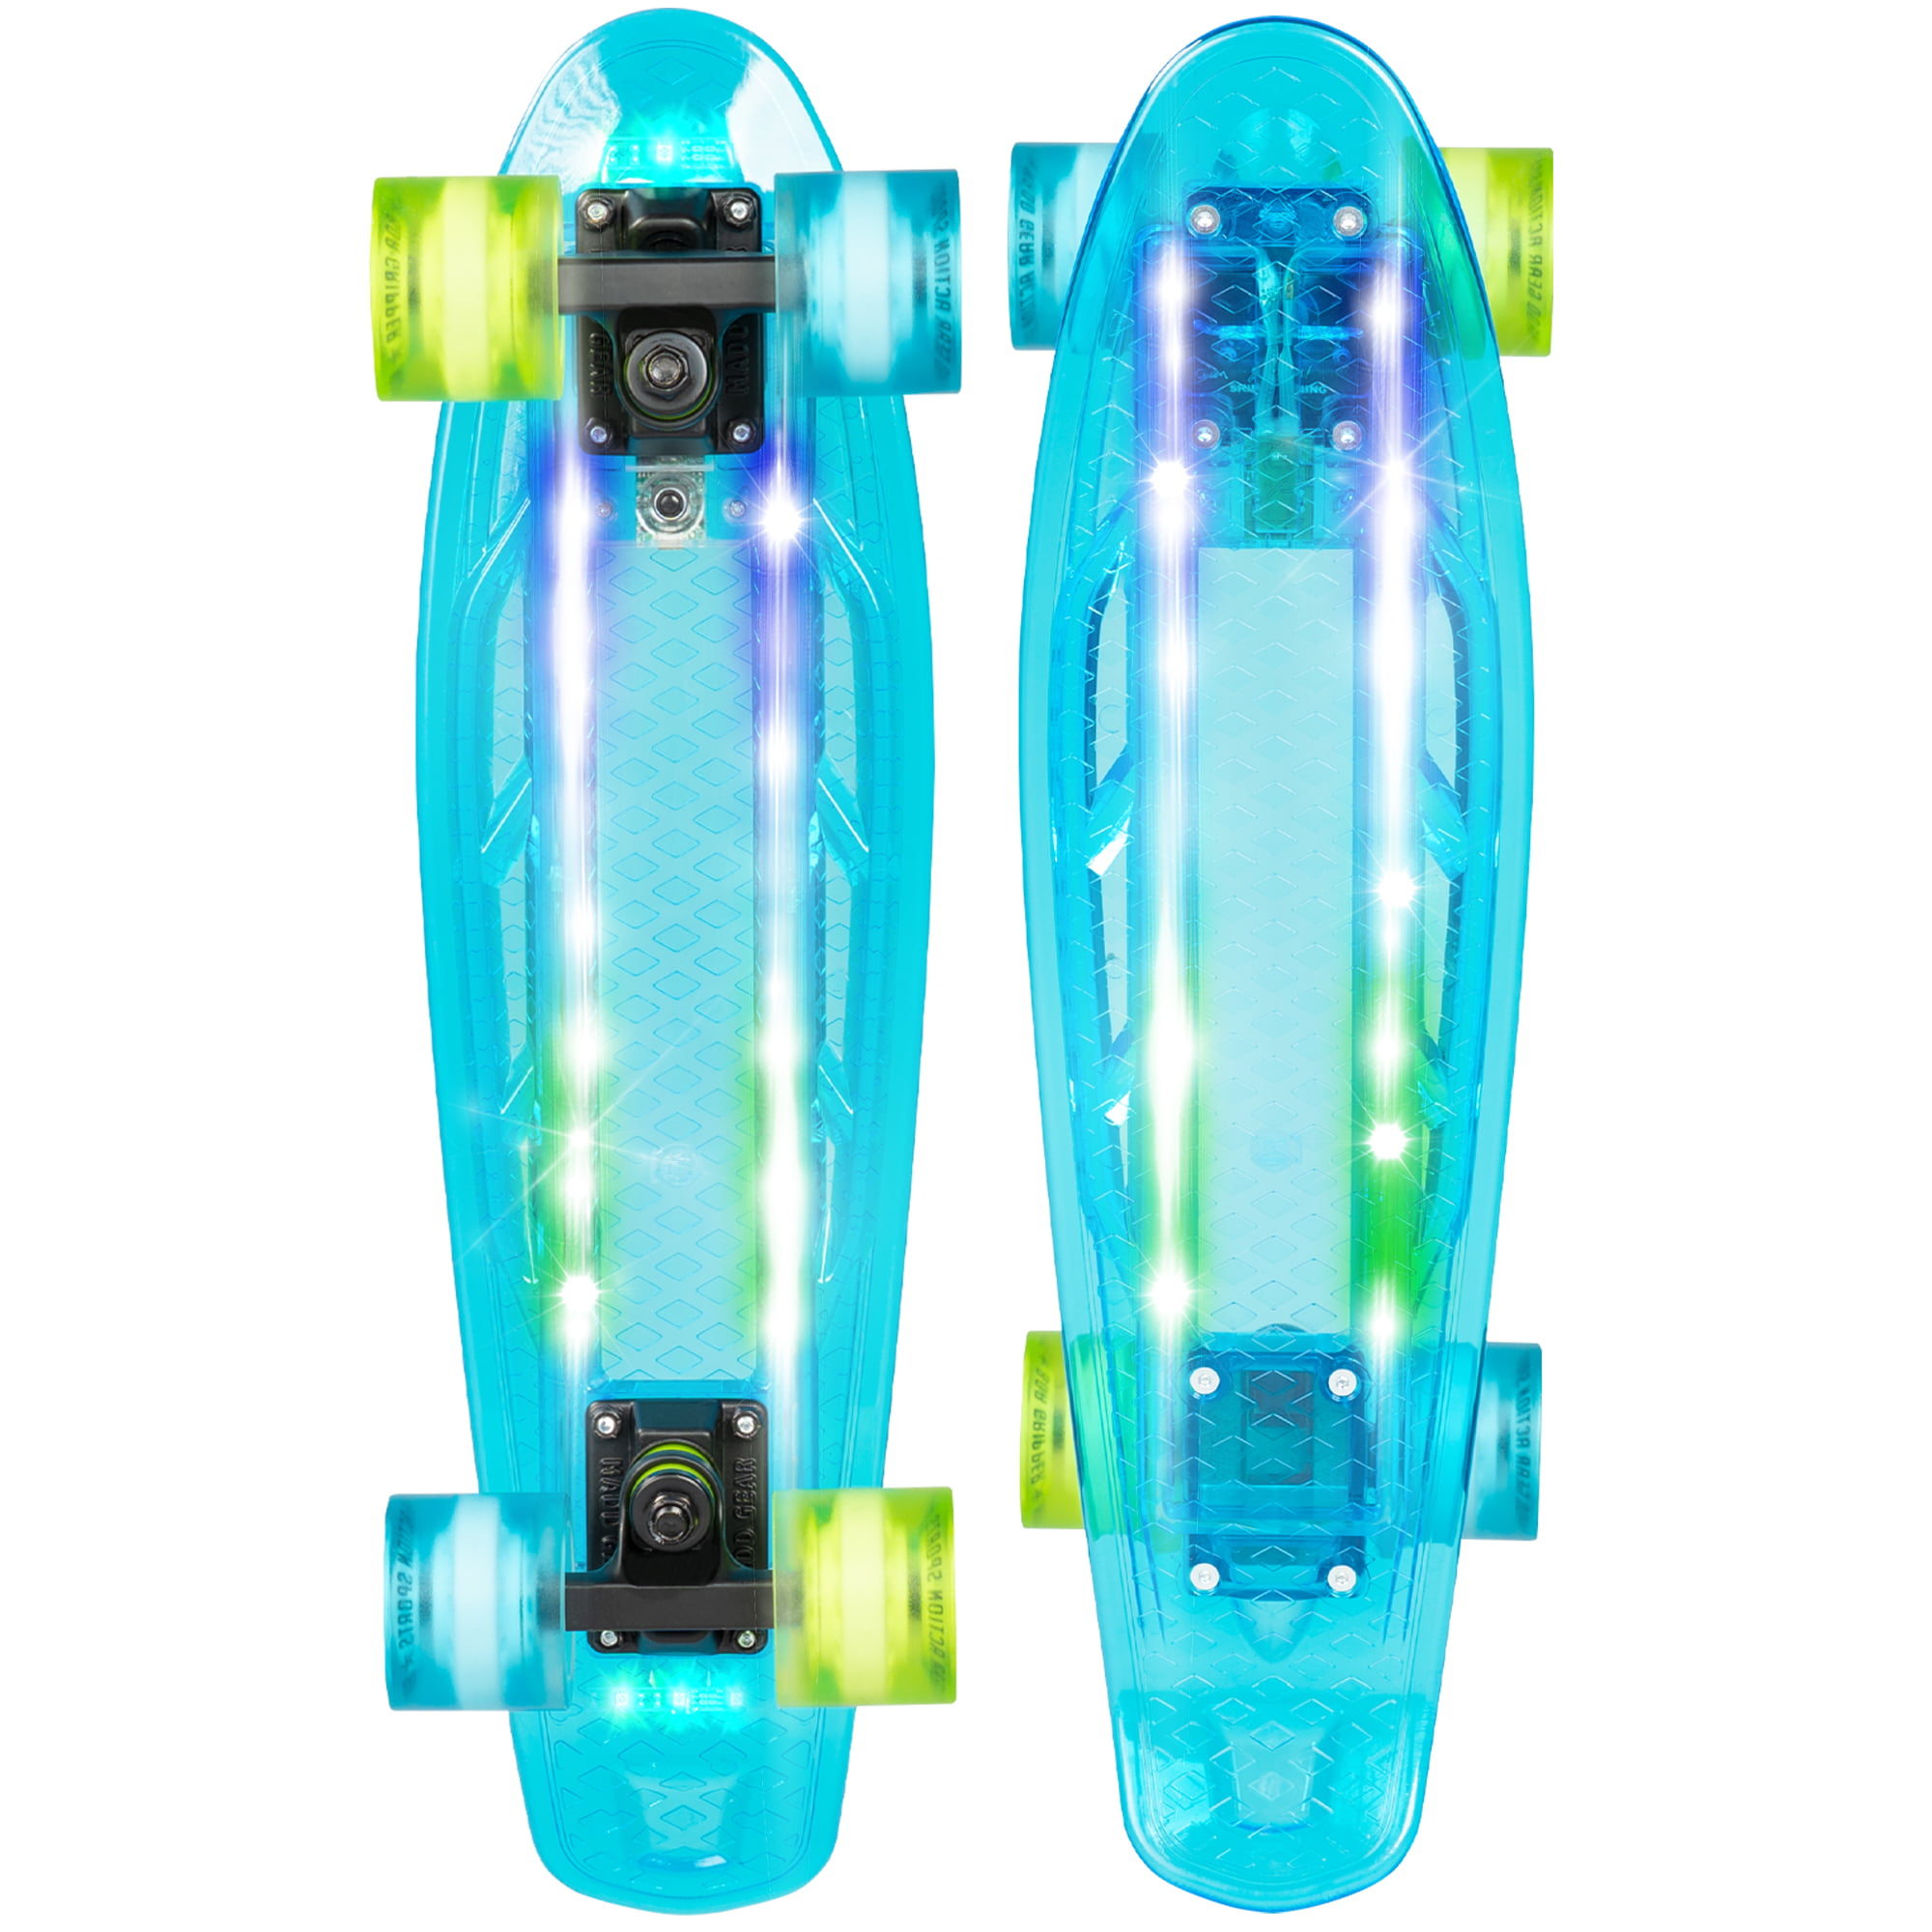 Madd Gear Light-up Kids Skateboard Retro Mini Cruiser 62mm Wheels - Penny Complete Blue - Walmart.com